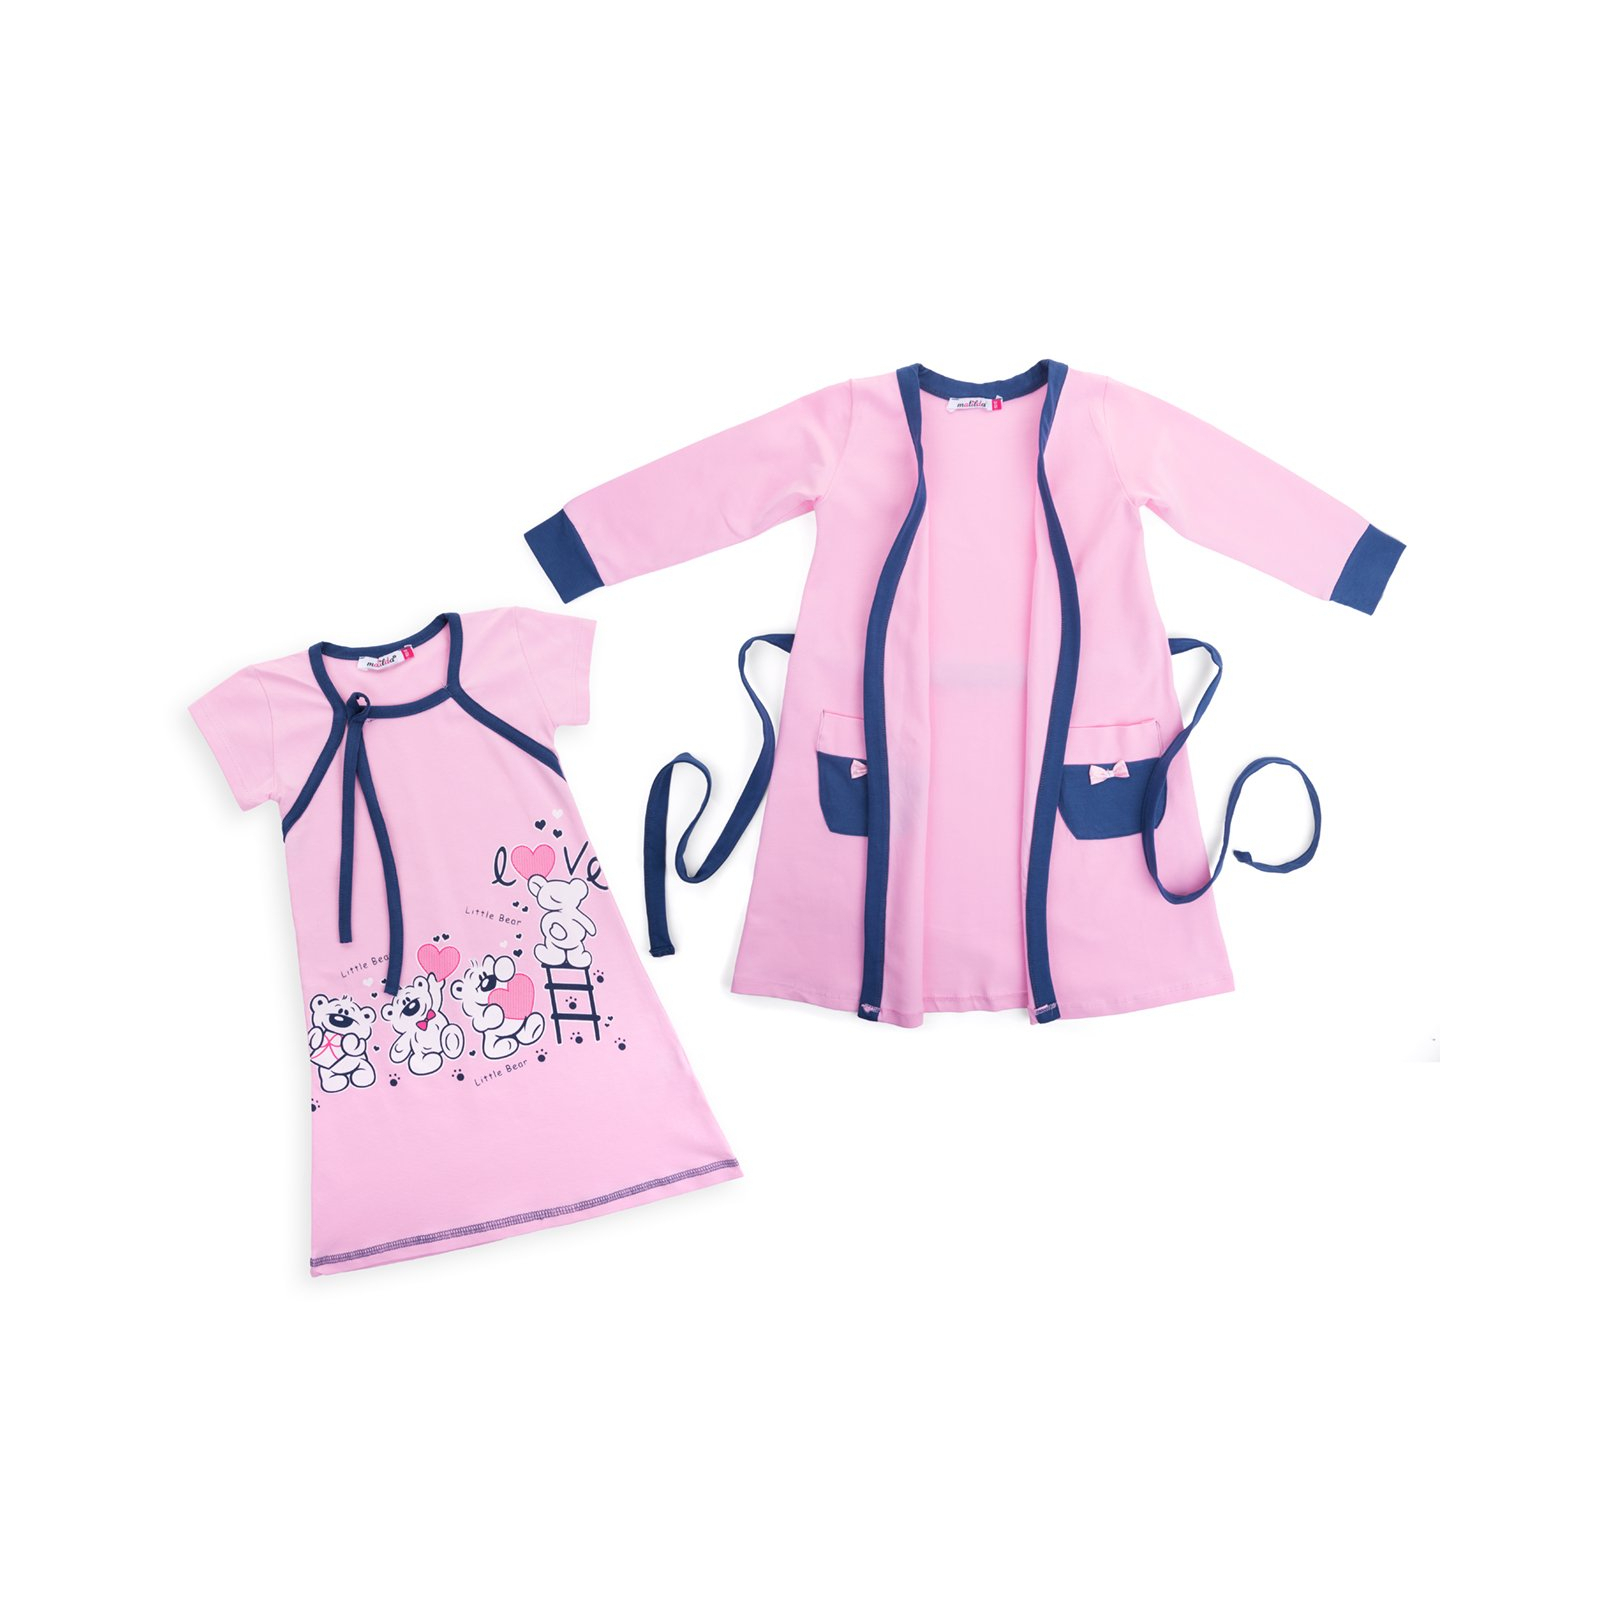 Пижама Matilda и халат с мишками "Love" (7445-164G-pink)